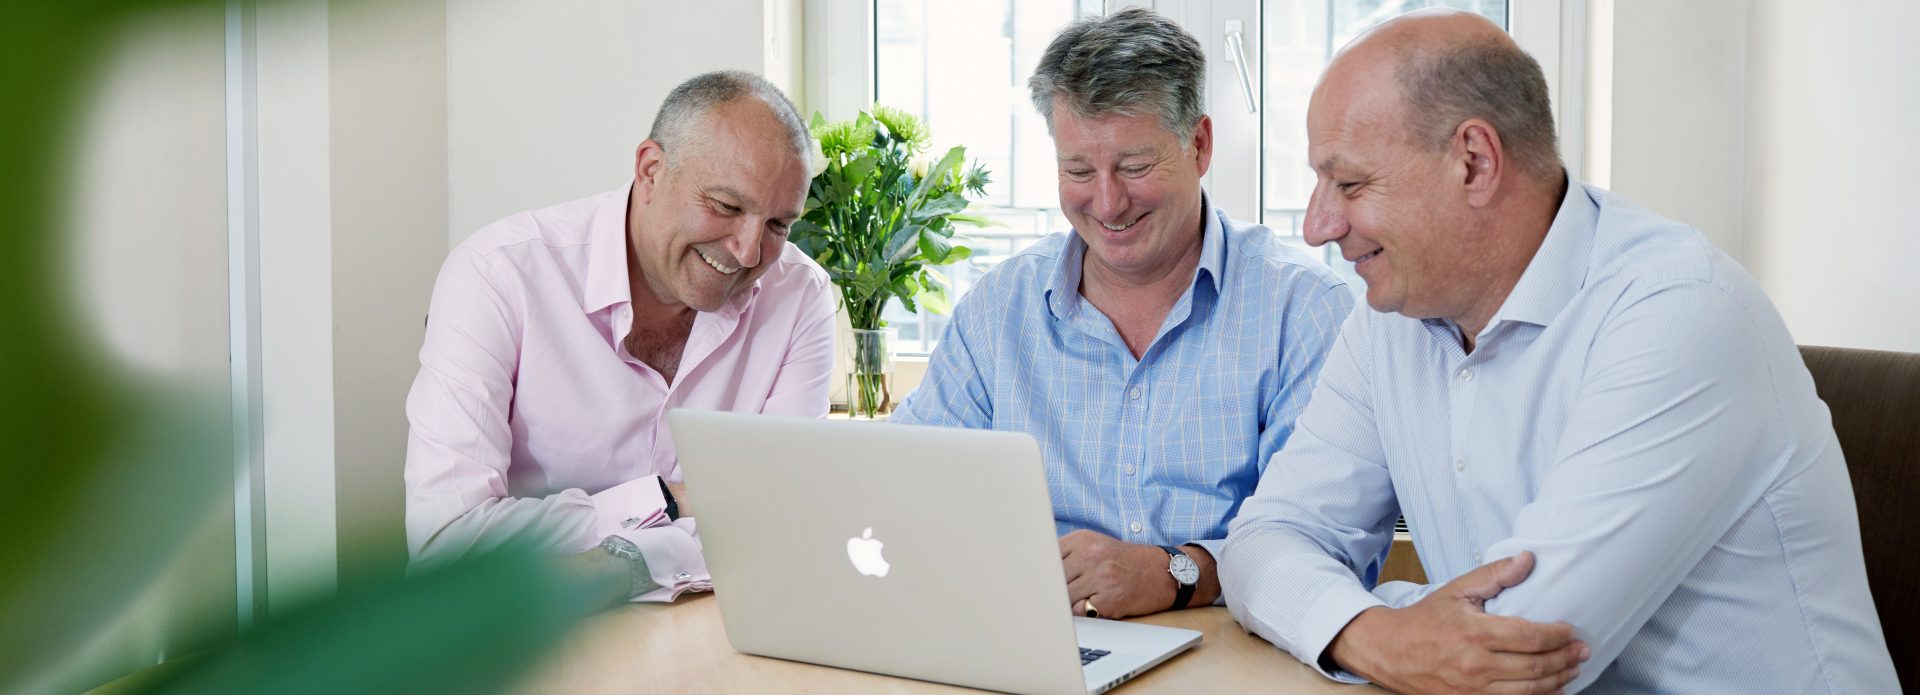 3 business men looking at laptop